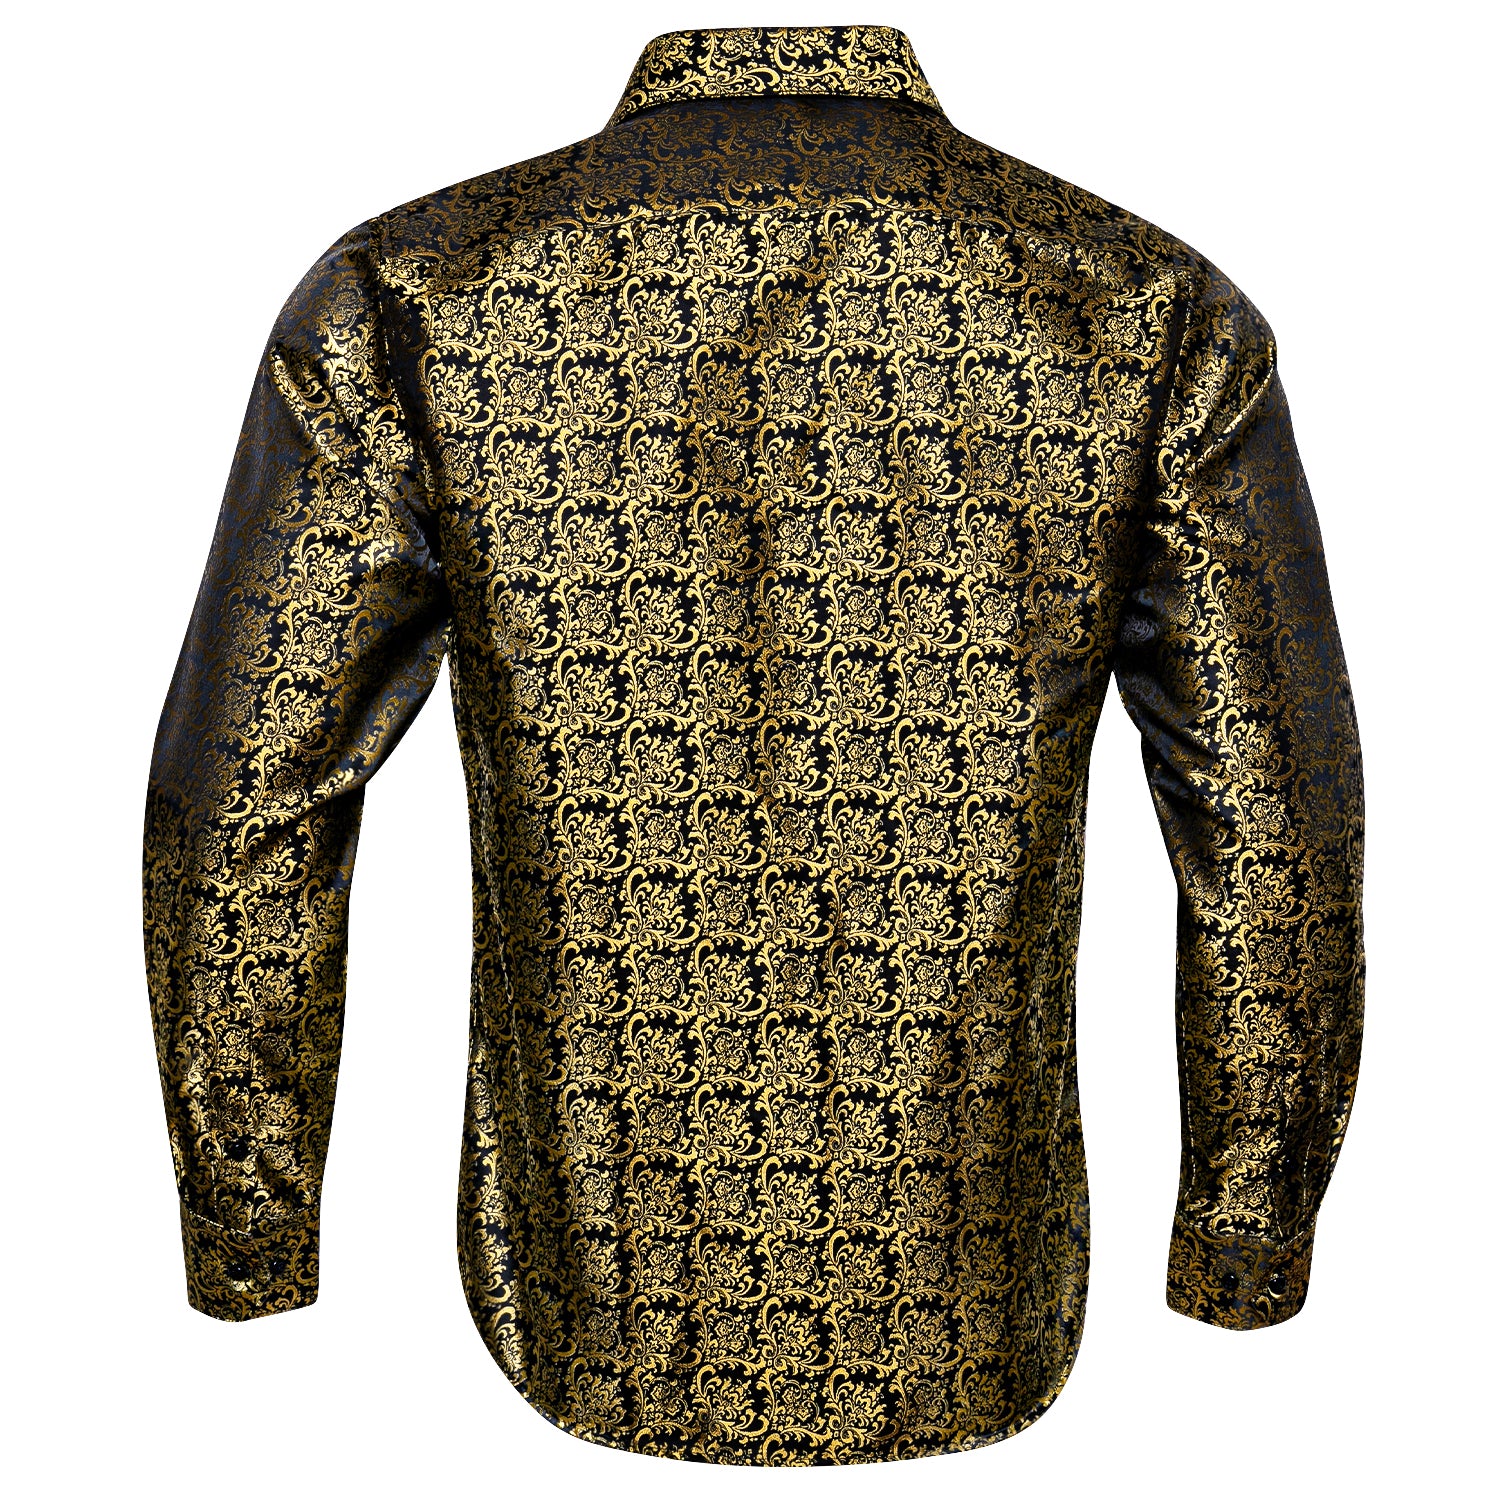 Barry.wang New Fashionable Black Golden Silk Floral Long Sleeve Men's Shirt